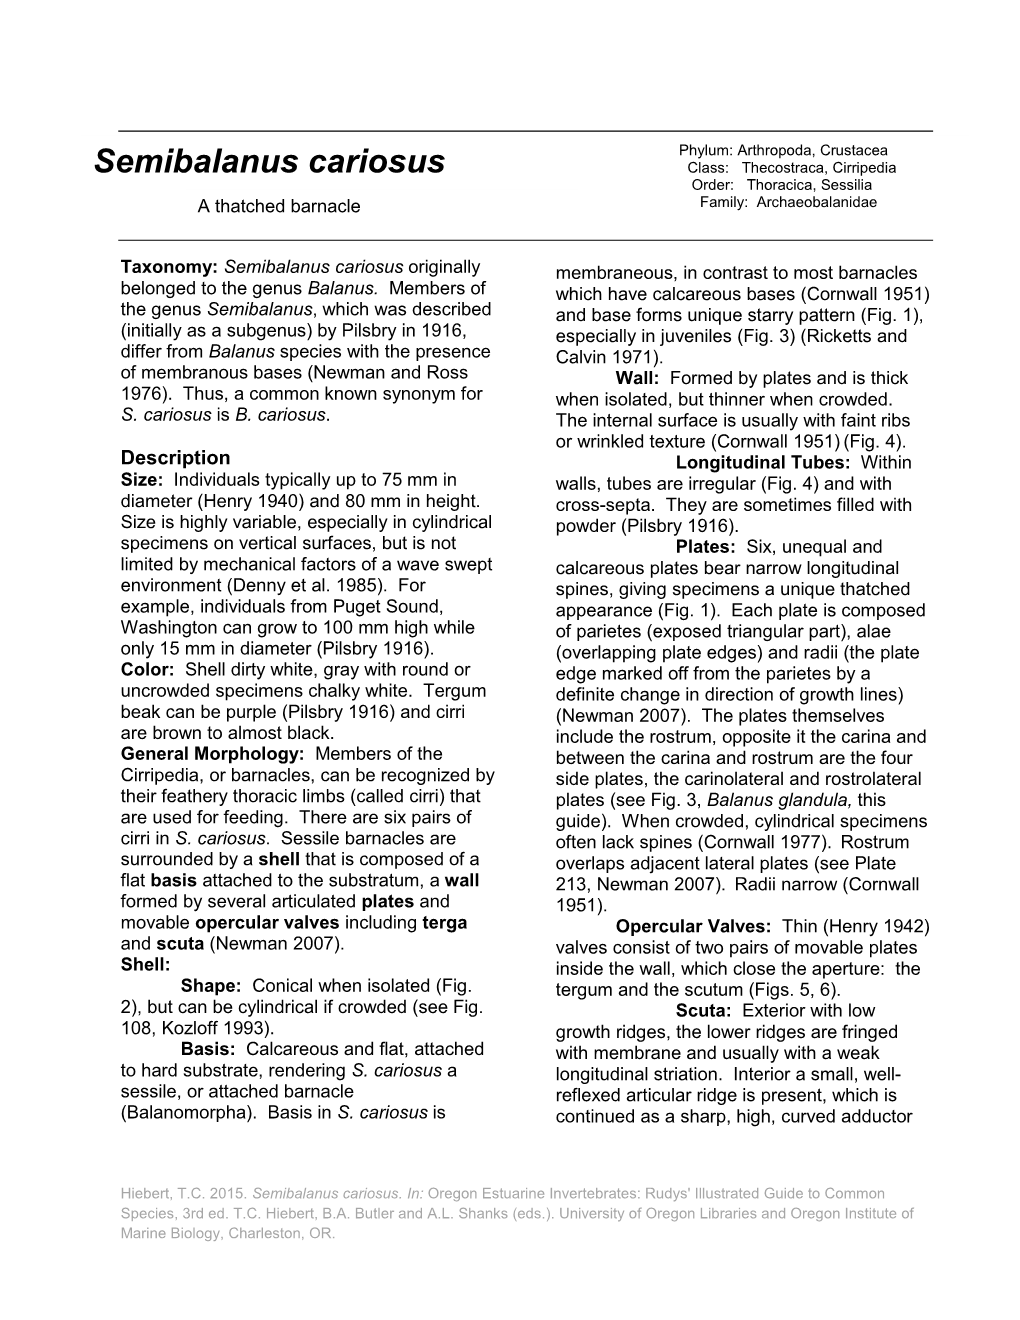 Semibalanus Cariosus Class: Thecostraca, Cirripedia Order: Thoracica, Sessilia a Thatched Barnacle Family: Archaeobalanidae